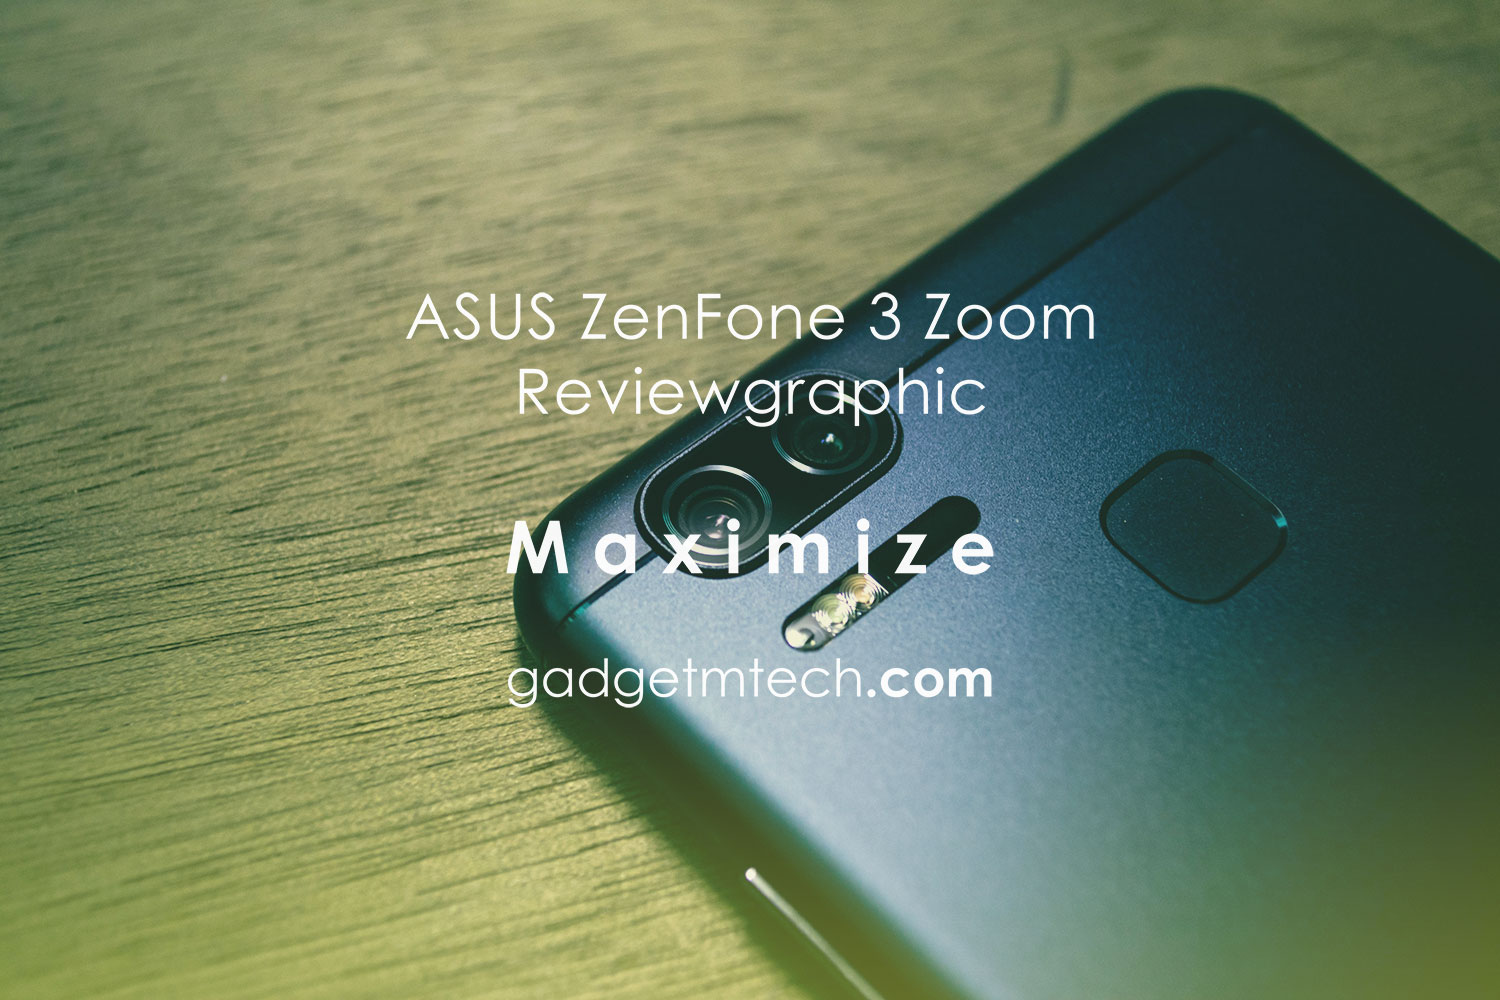 ASUS ZenFone 3 Zoom Reviewgraphic: Maximize